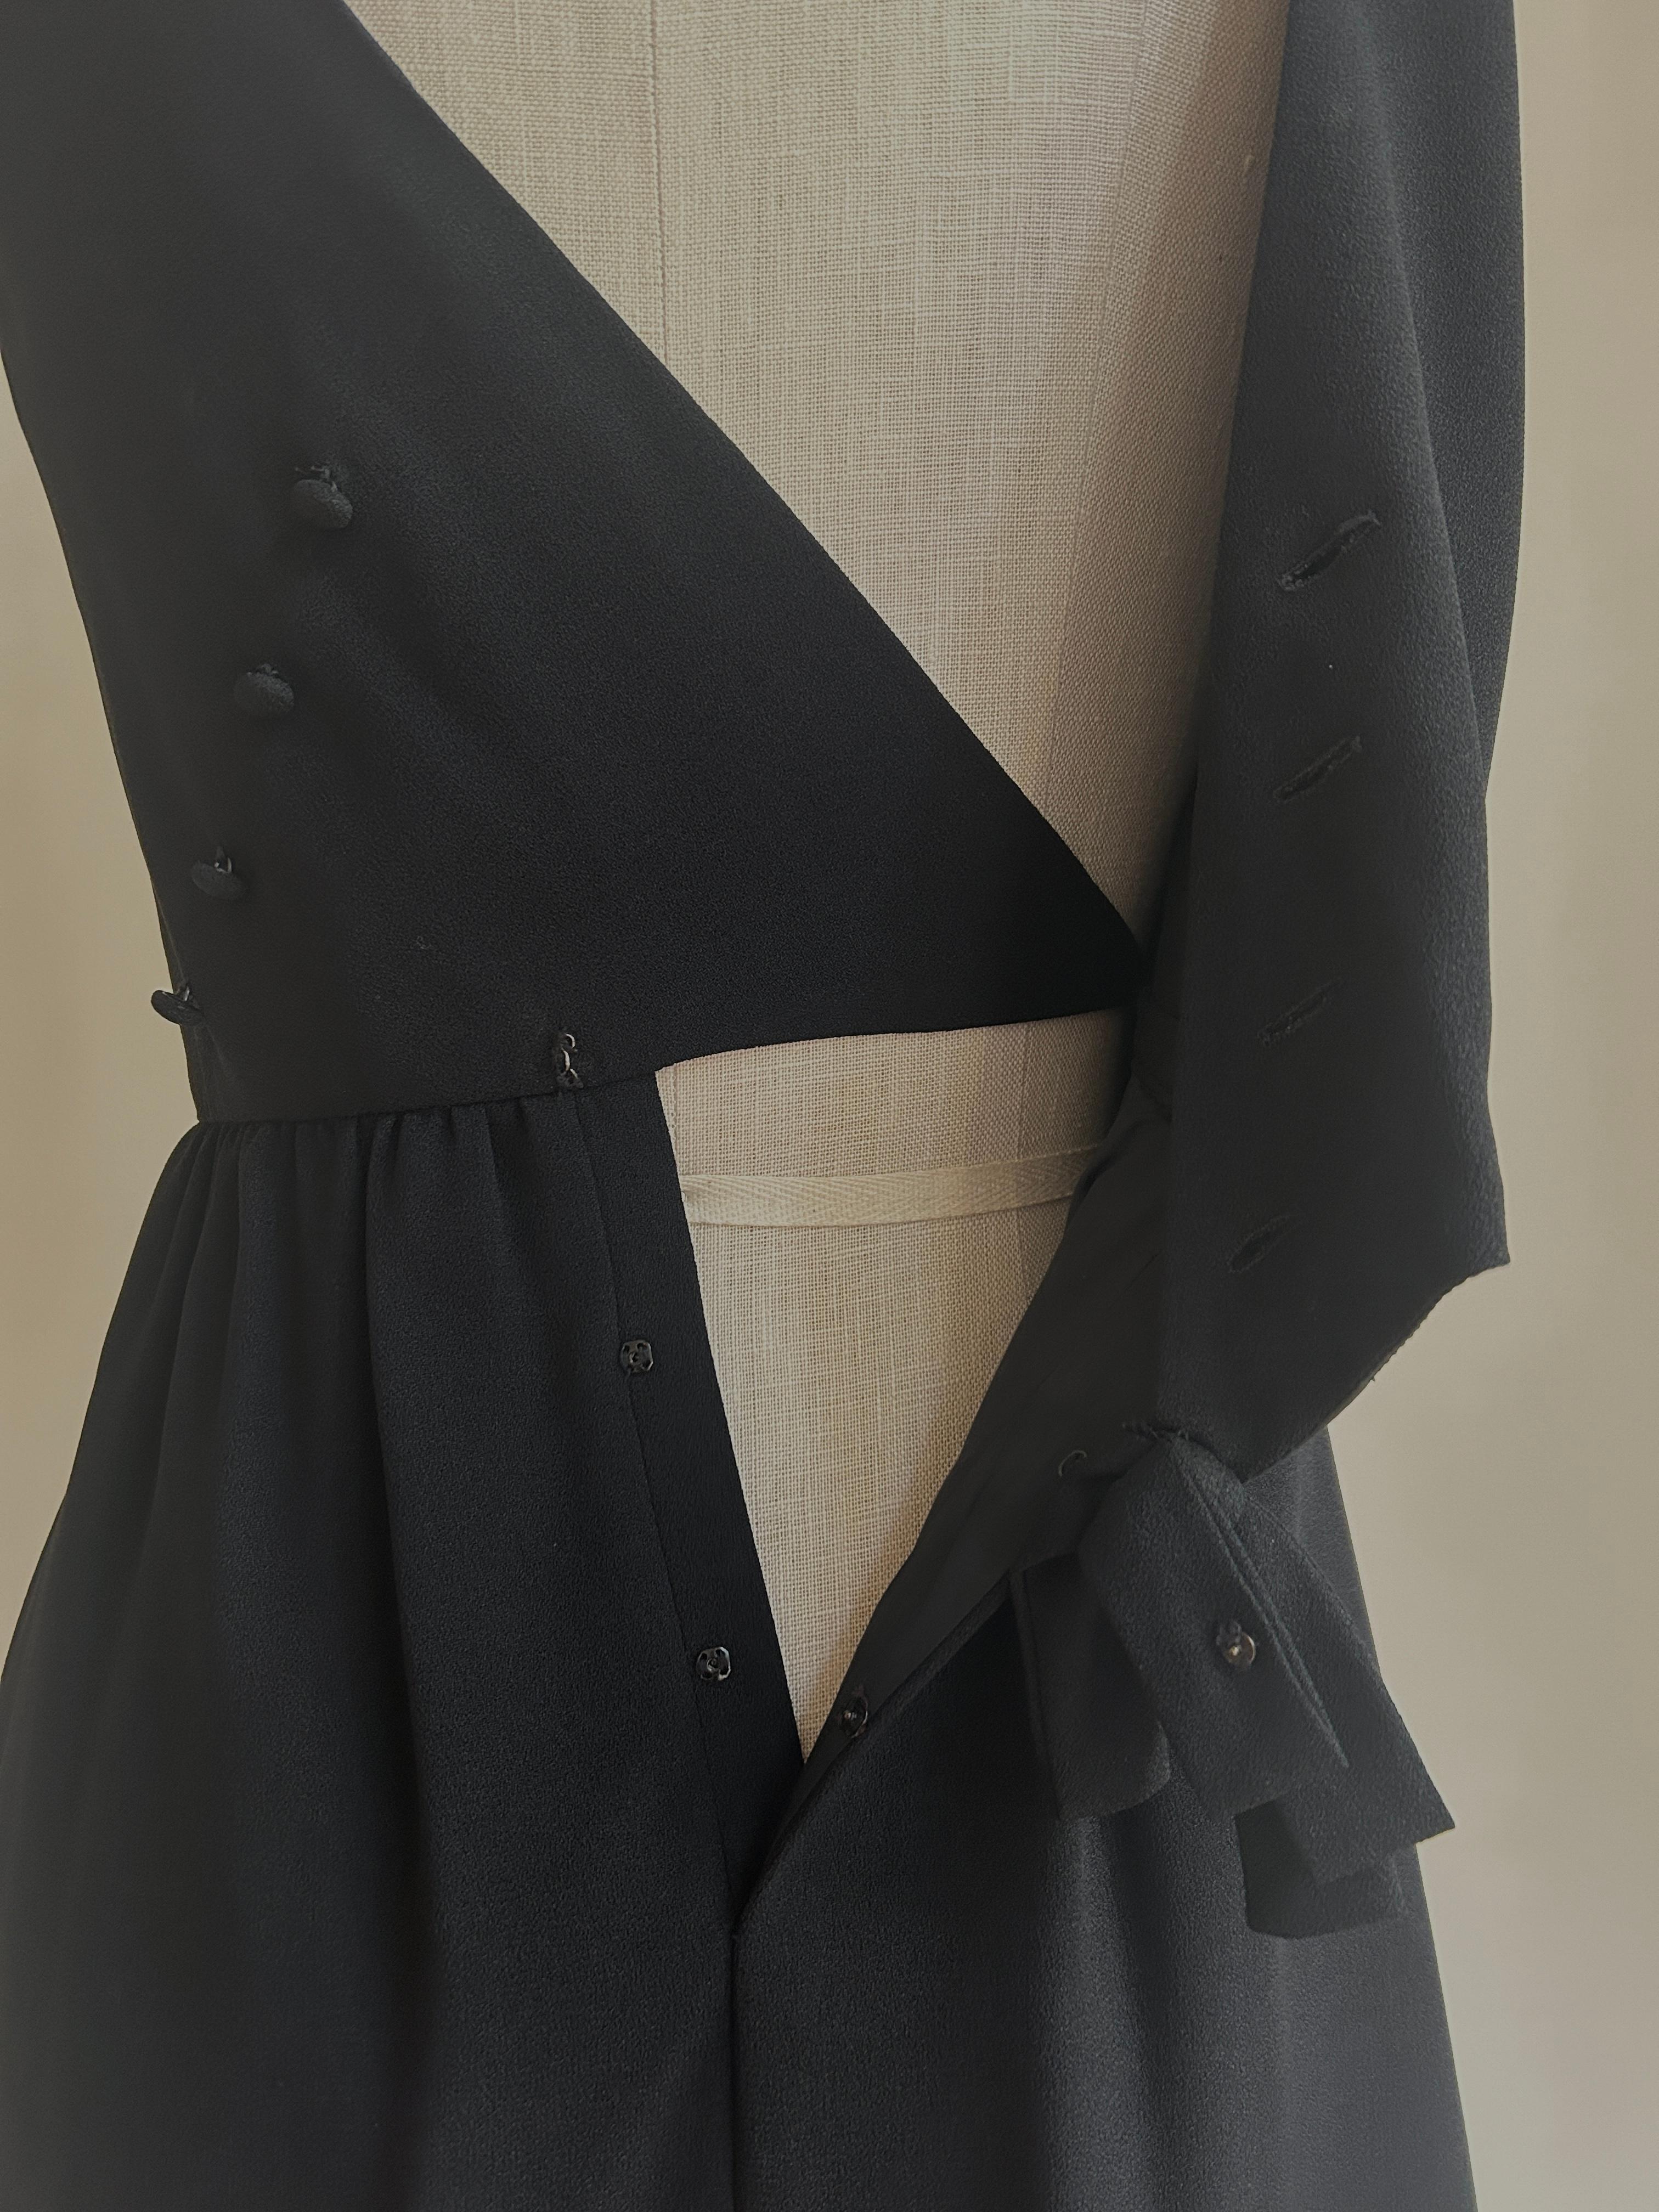 1960s Lanz Originals Button Back Little Black Dress from Bullocks of Wilshire For Sale 3